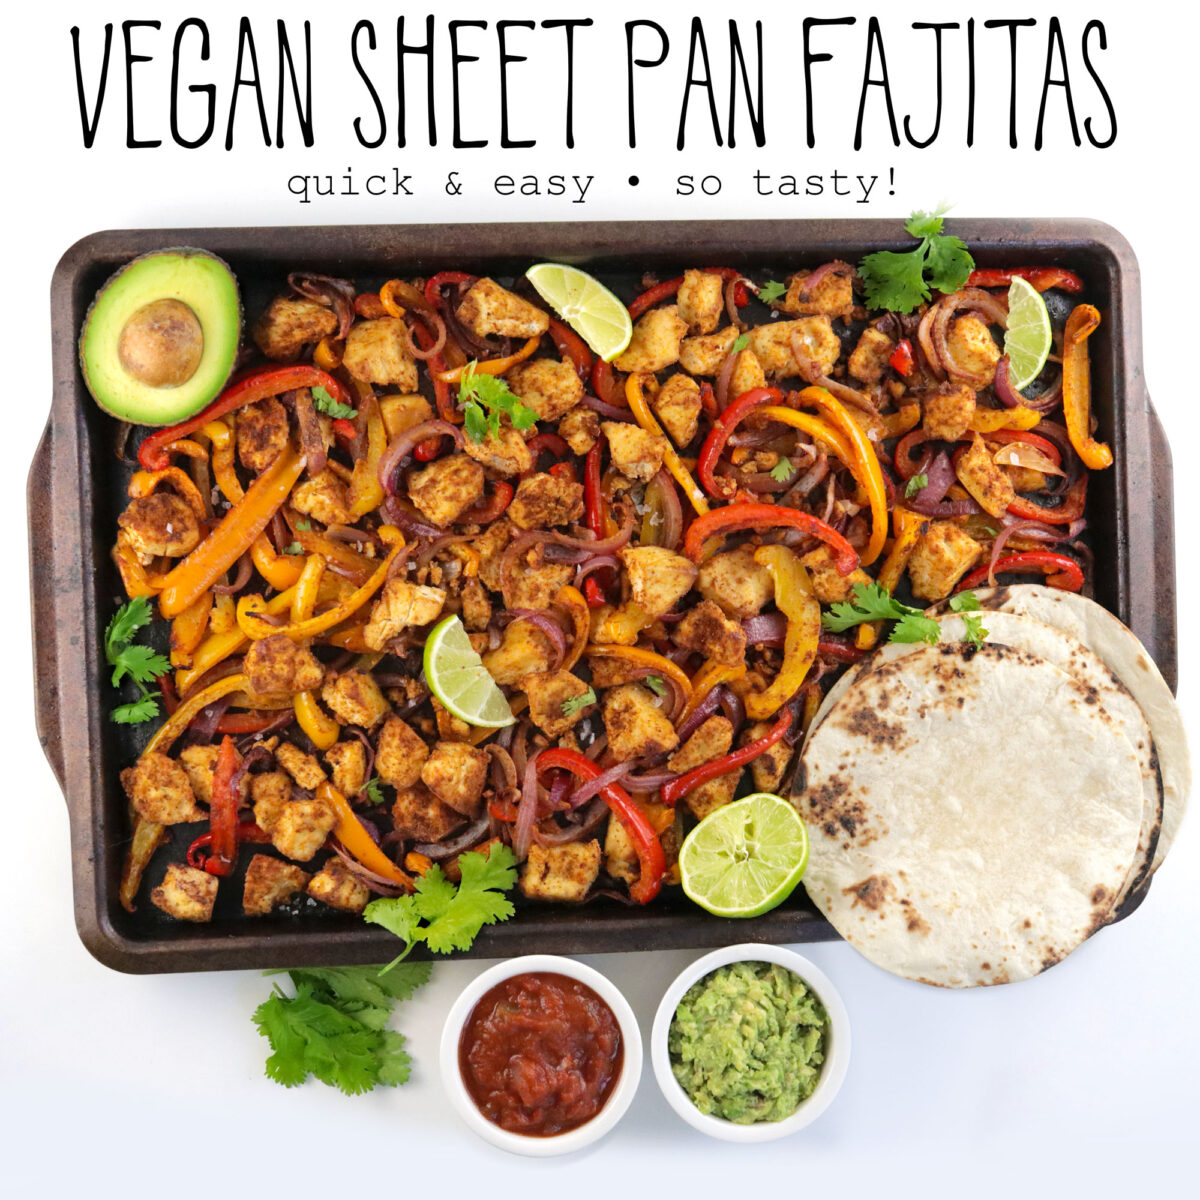 Vegan Sheet Pan Fajitas